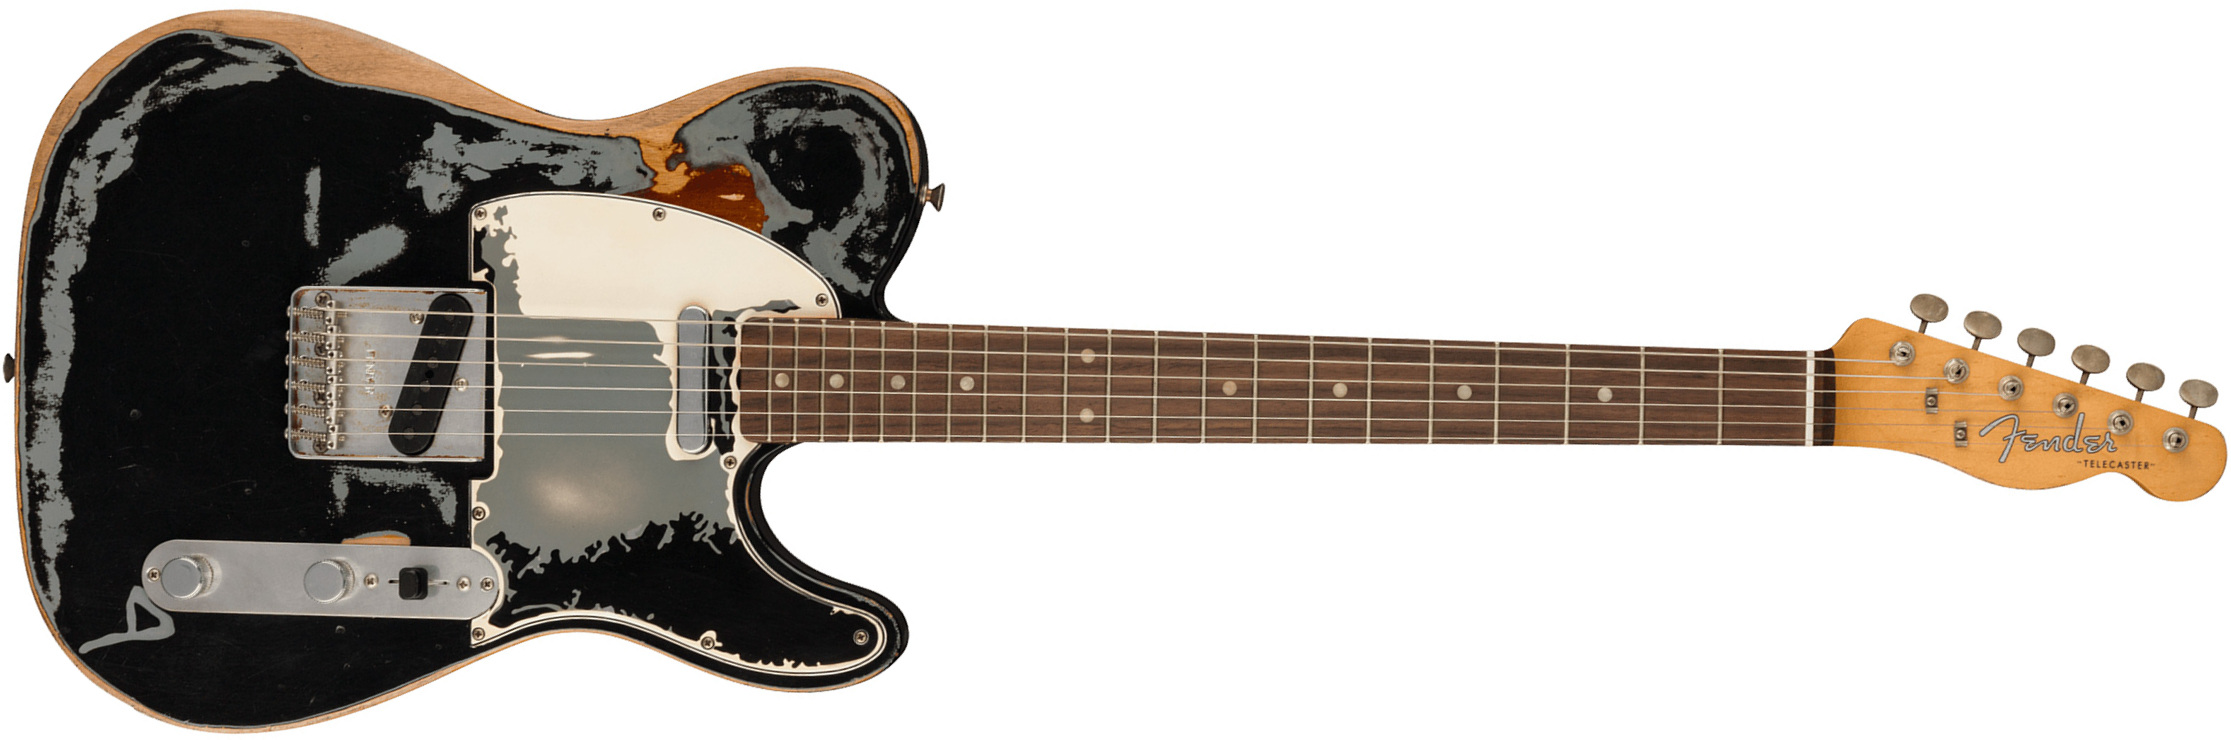 Fender Joe Strummer Tele Mex Signature 2s Ht Rw - Road Worn Black Over 3-color Sunburst - Guitarra eléctrica con forma de tel - Main picture